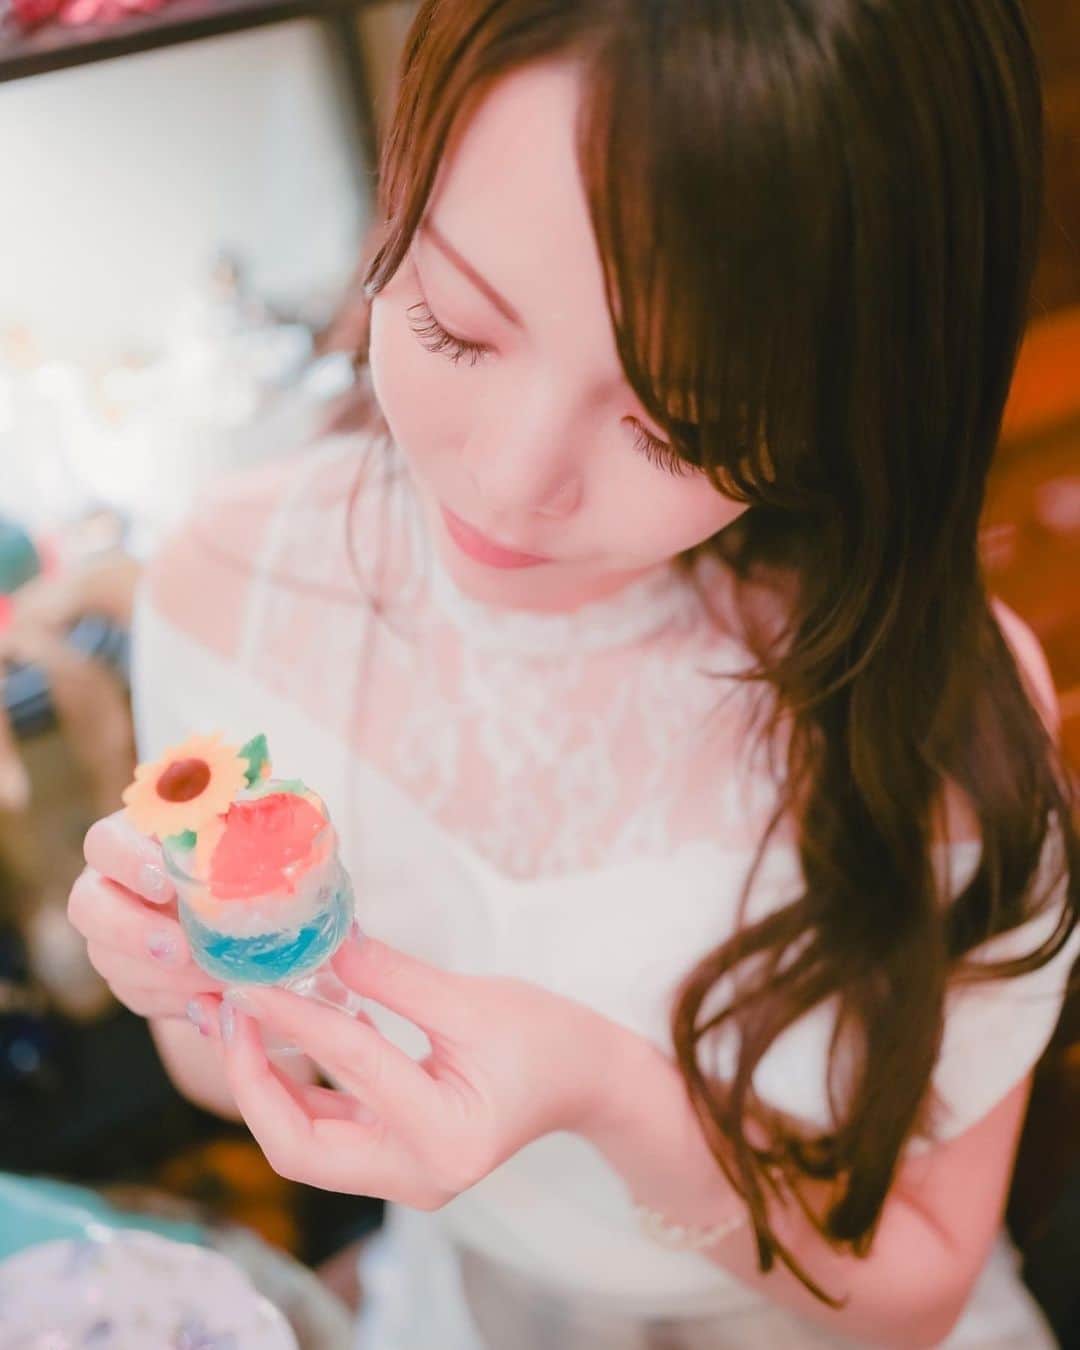 Mikaのインスタグラム：「『cafe acorite』  可愛いをたくさん食べに来た(☆∀☆)  Summer tropical afternoon tea🍉  アンティークのお皿やポットを選んで至福のひとときを過ごせました♡ ご馳走様でした•*¨*•.¸♬︎  ・ ・ ・ photo by @yuin_yuin_yuin 📸 model @mika_portrait  ・ ・ ・ ・ follow me💋  #美花展 #アフタヌーンティー #ヌン活好きな人と繋がりたい  #アフタヌーンティー巡り  #カフェアコリット #夏のアフタヌーンティー #目白アフタヌーンティー #目白カフェ #ヌン活女子 #東京カフェ #誰かの記憶に残る写真 #カメラ好きな人と繋がりたい #ファインダー越しの私の世界 #ポトレファン倶楽部 #被写体モデル #その瞬間は永遠の思い出 #みんなのフォト #ポトレ女子 #撮影依頼募集中 #jp_portrait部 #japanesegirl #asianbeauty #love_camera_club #jp_portrait #jp_portrait_collection #loves_united_portrait  #team_jp_ #global_ladies #photo_shorttrip #_lovely_weekend」